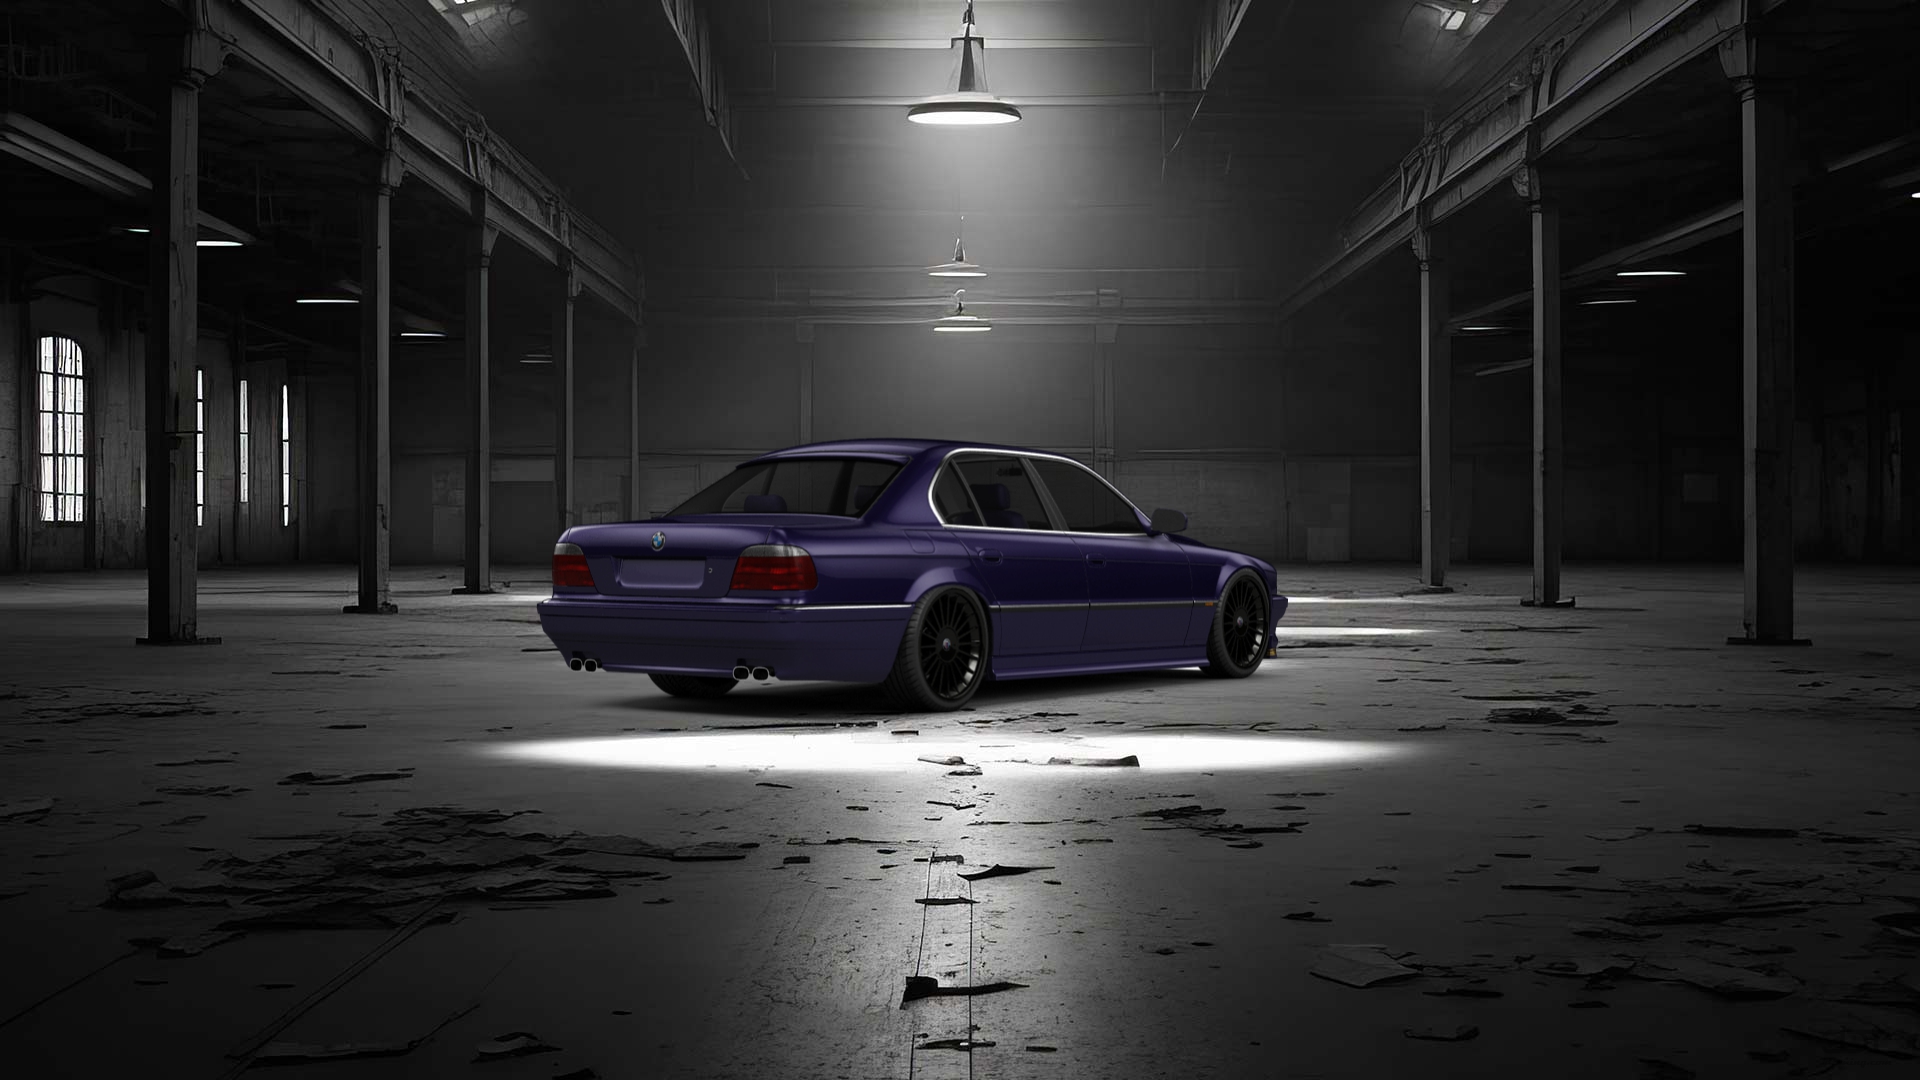 BMW 7 Series Sedan 1998 tuning